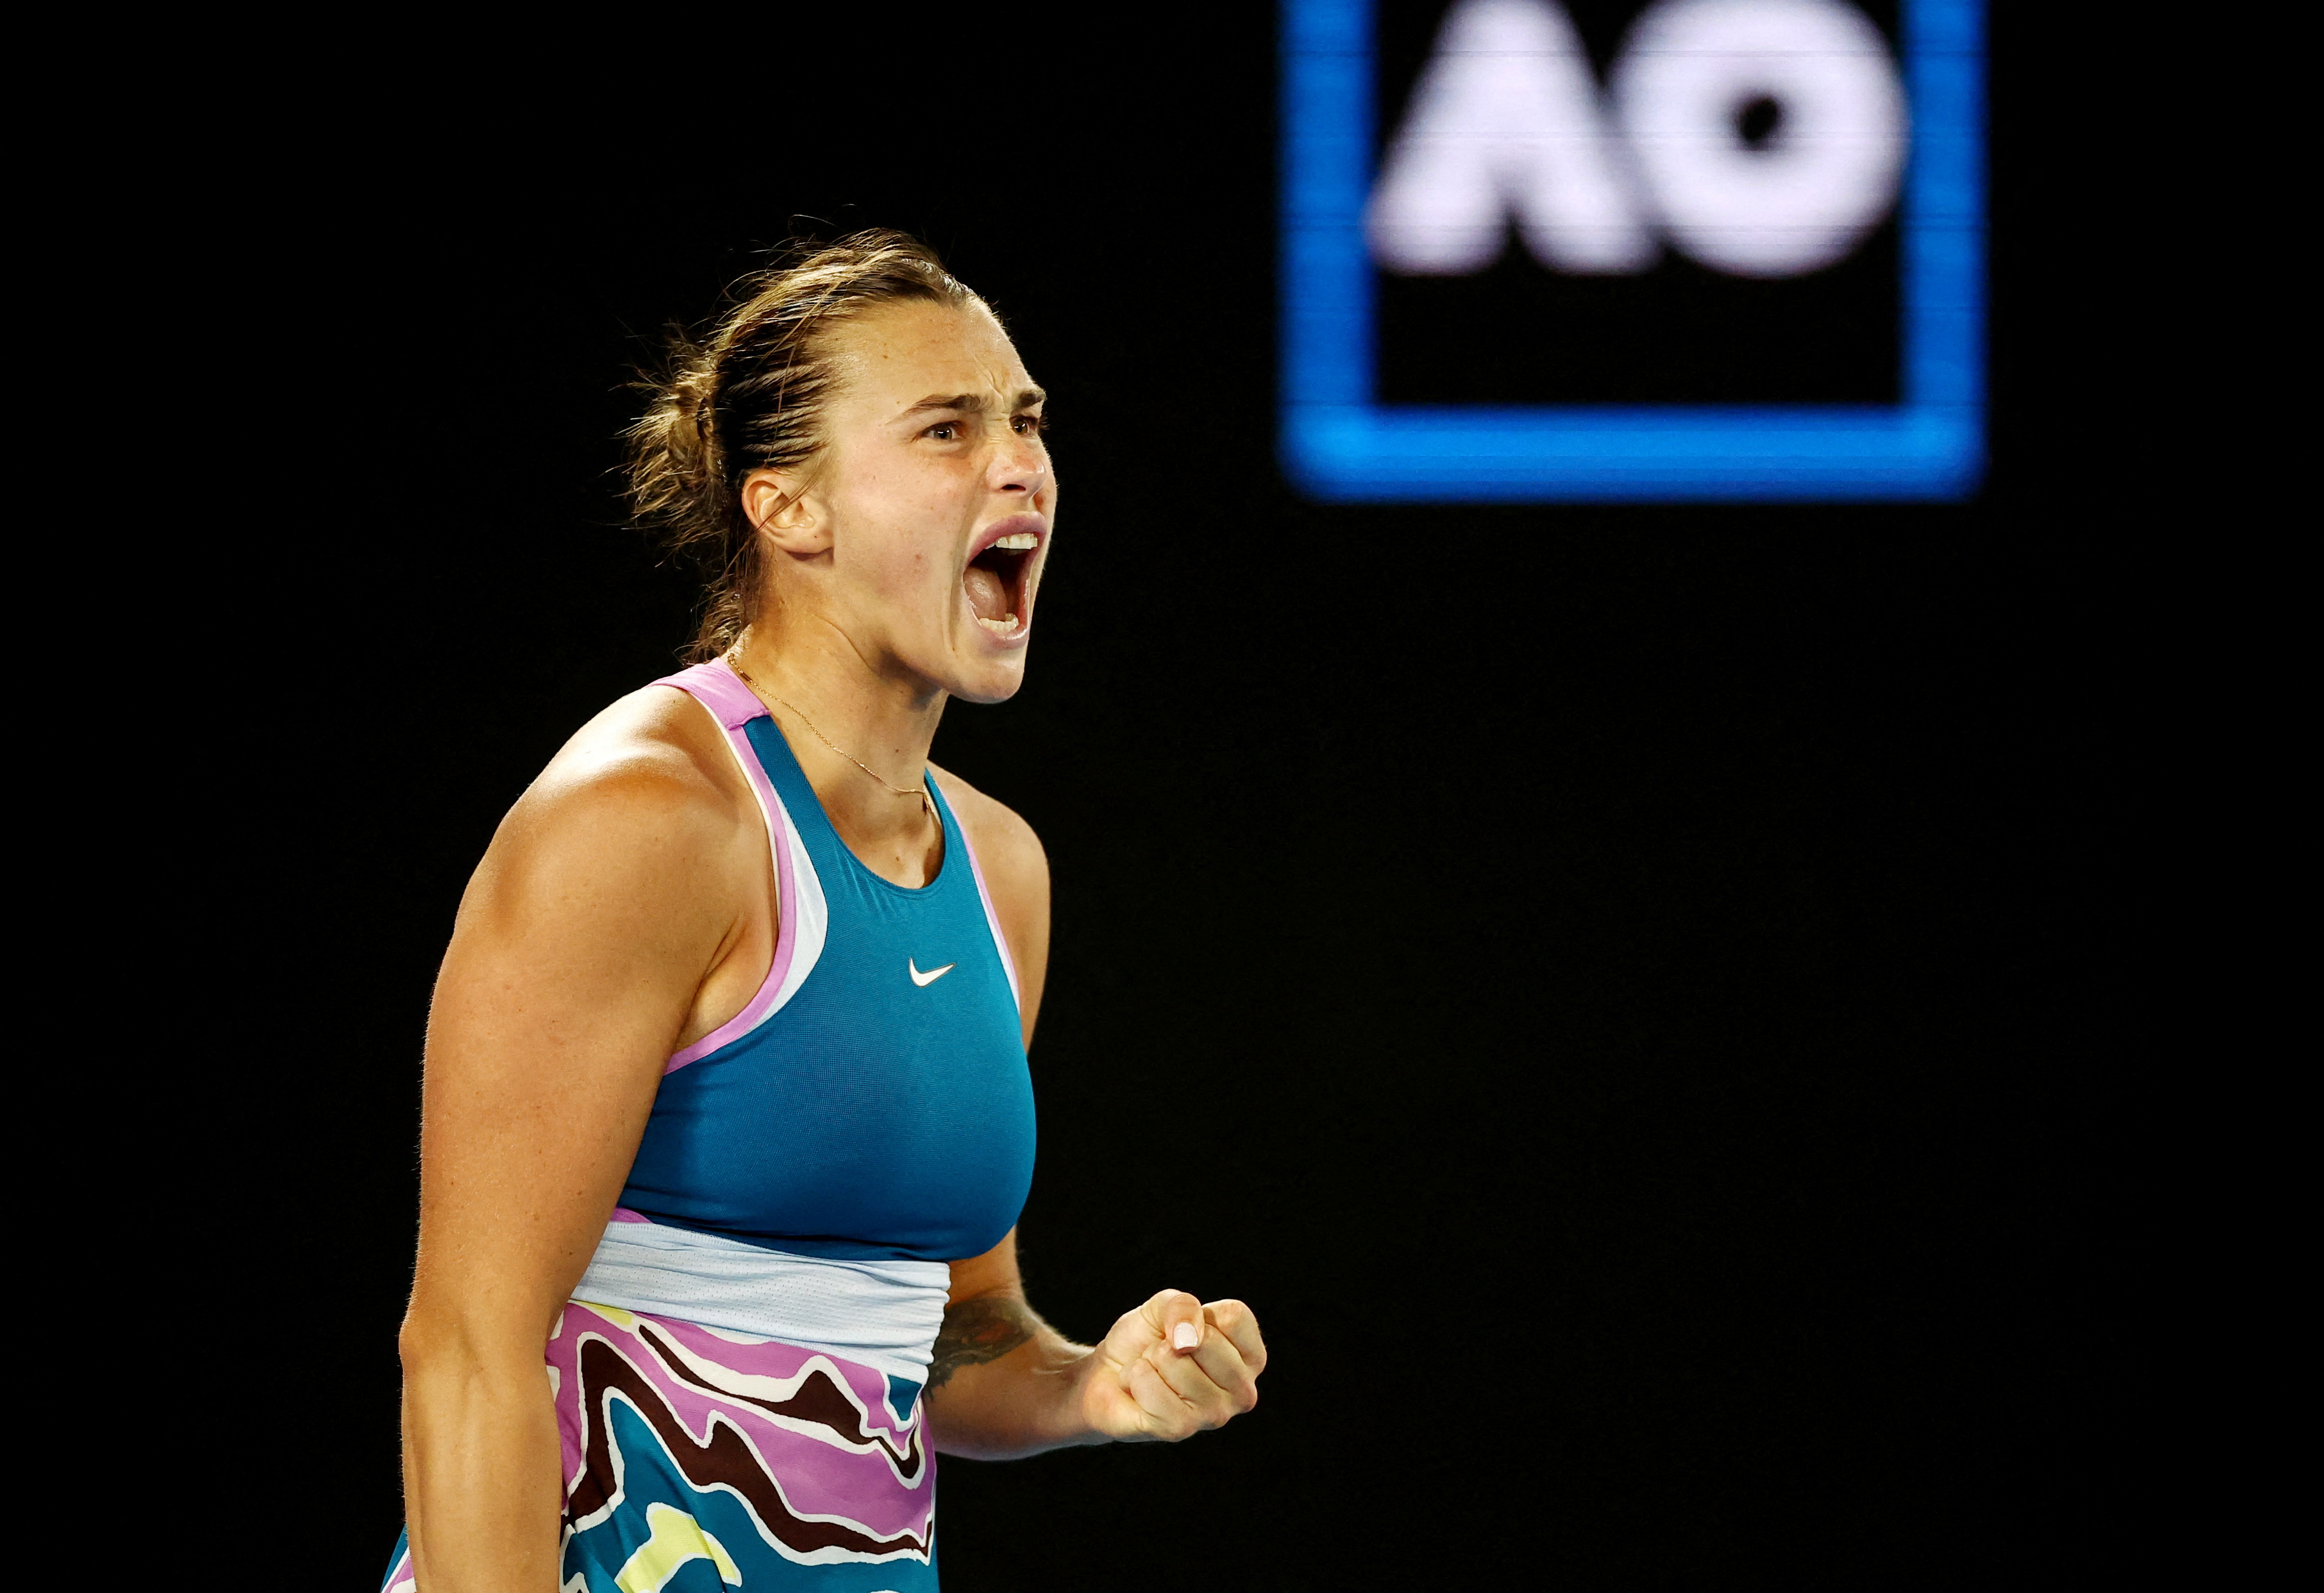 Elena Rybakina, Aryna Sabalenka to meet in Australian Open womens final